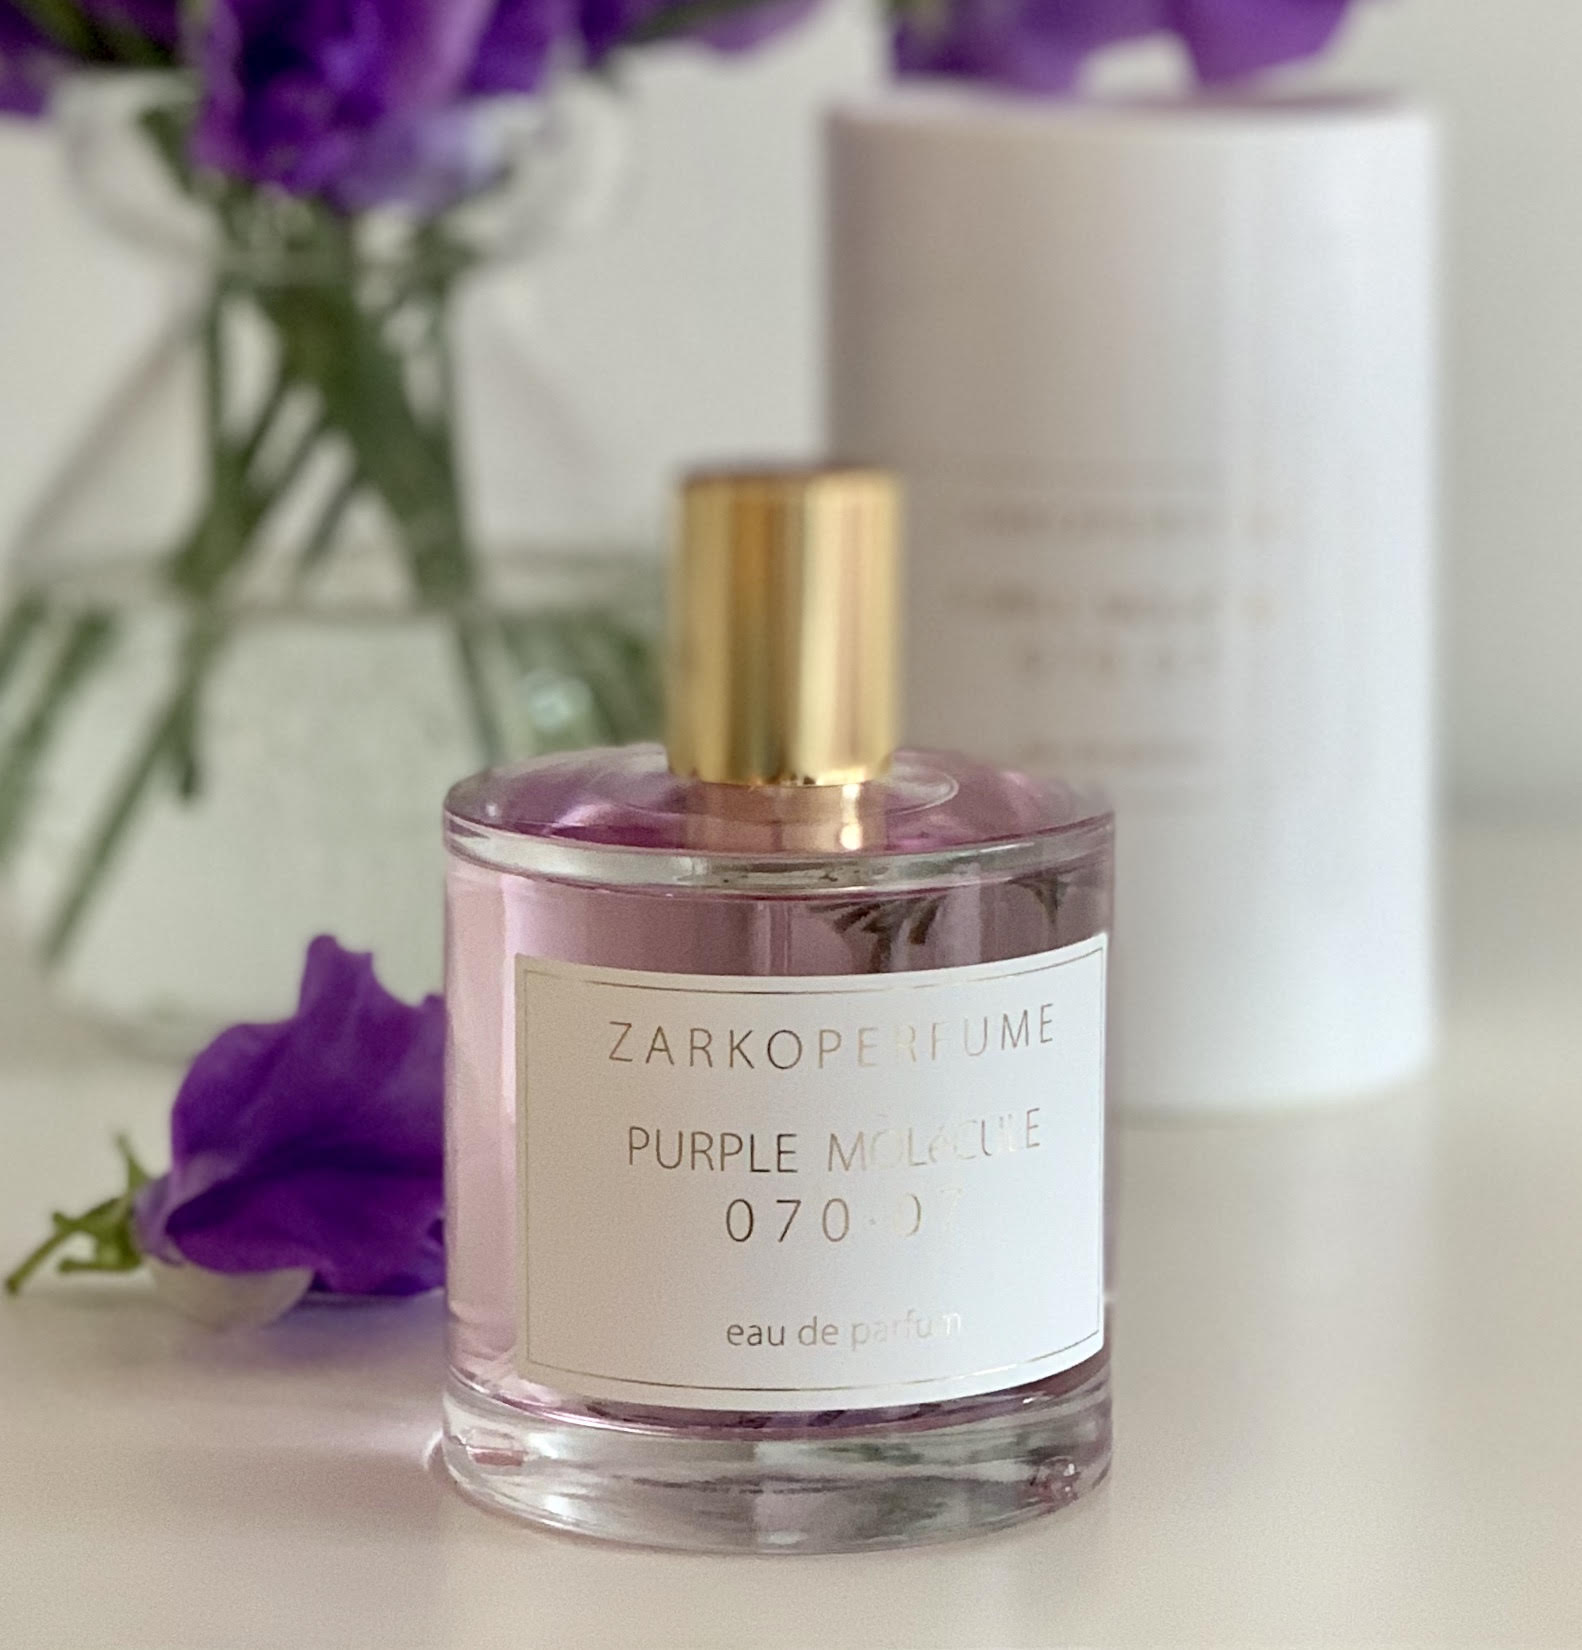 Zarkoperfume, Purple Molecule, 070 07, parfume, konkurrence, Magasin,